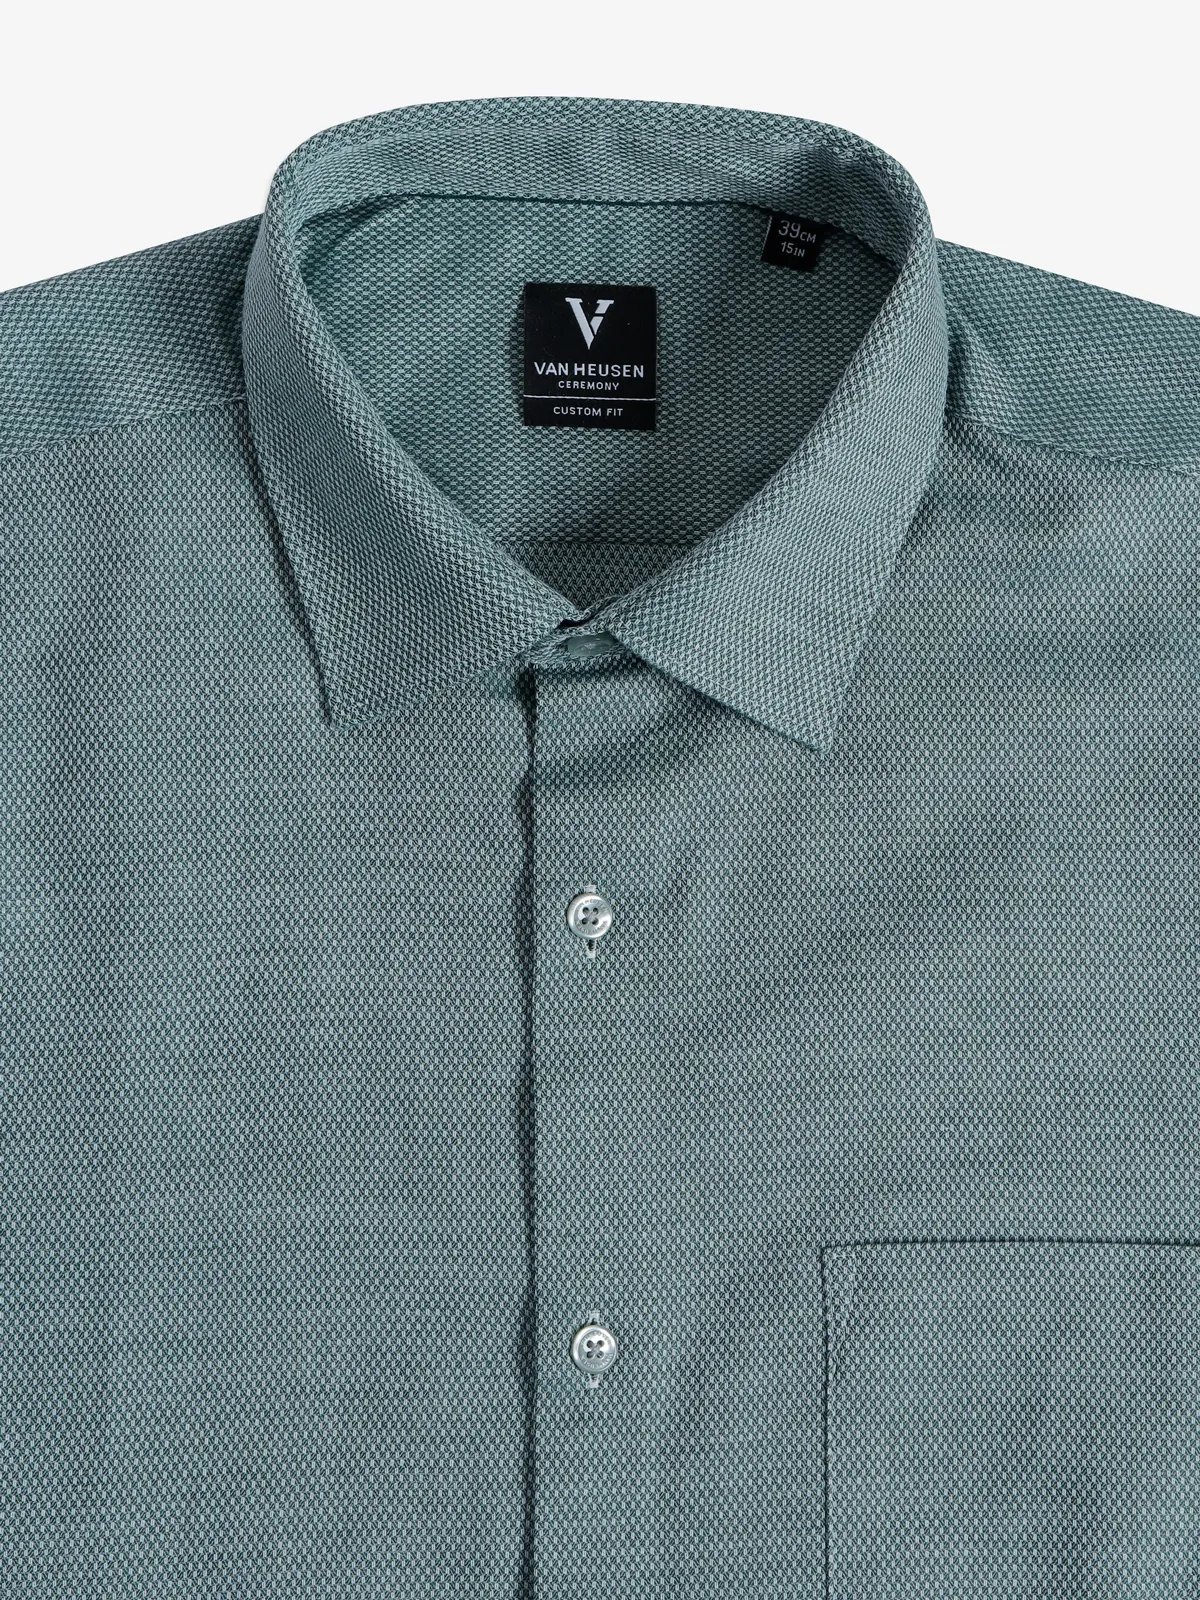 Van Heusen sage green textured shirt